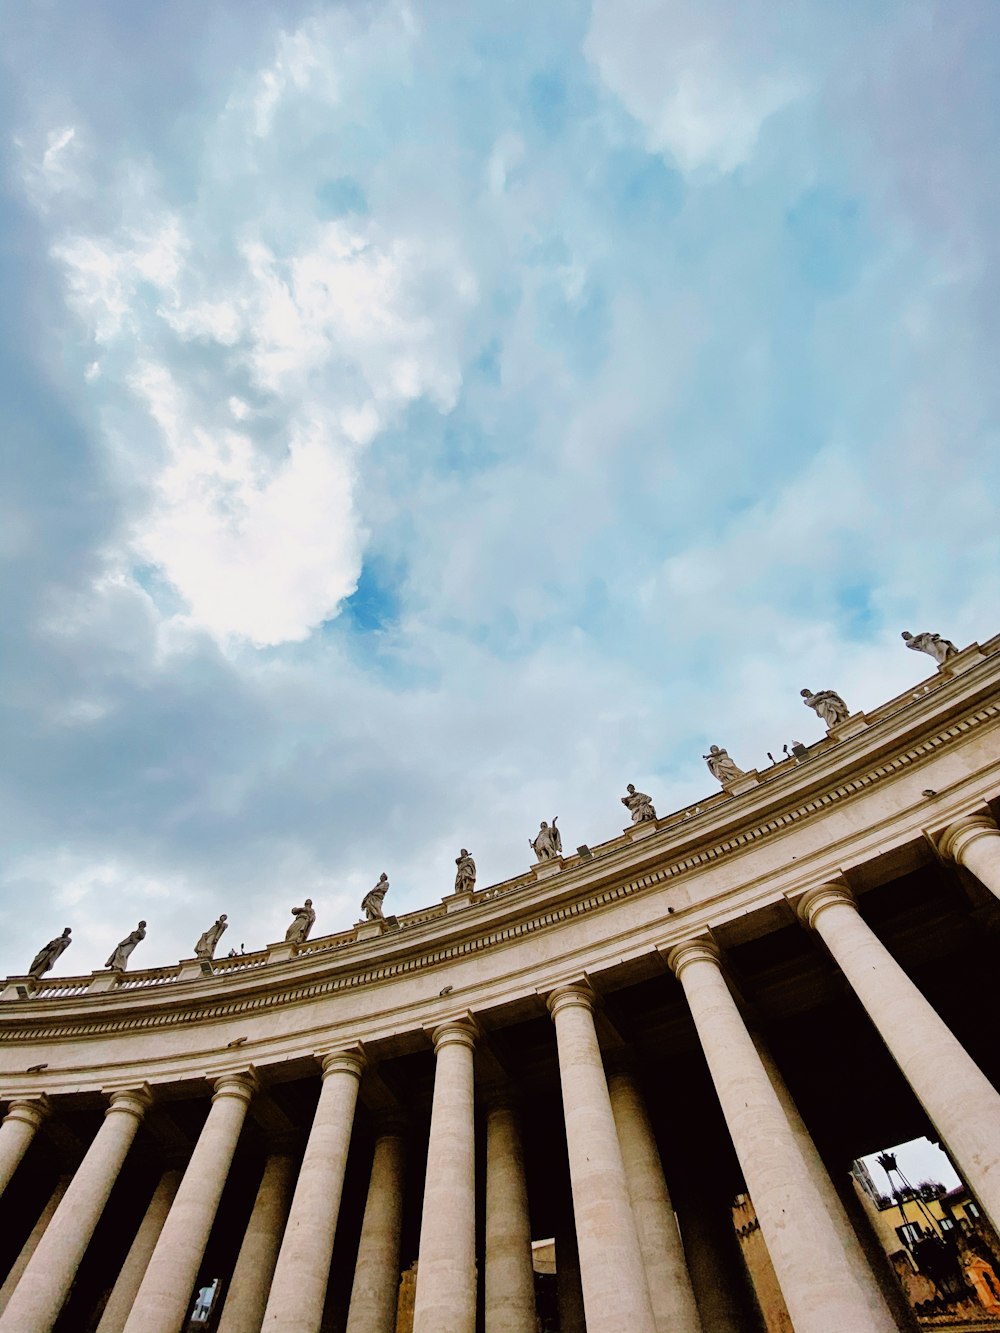 Corinthians columns under white clouds